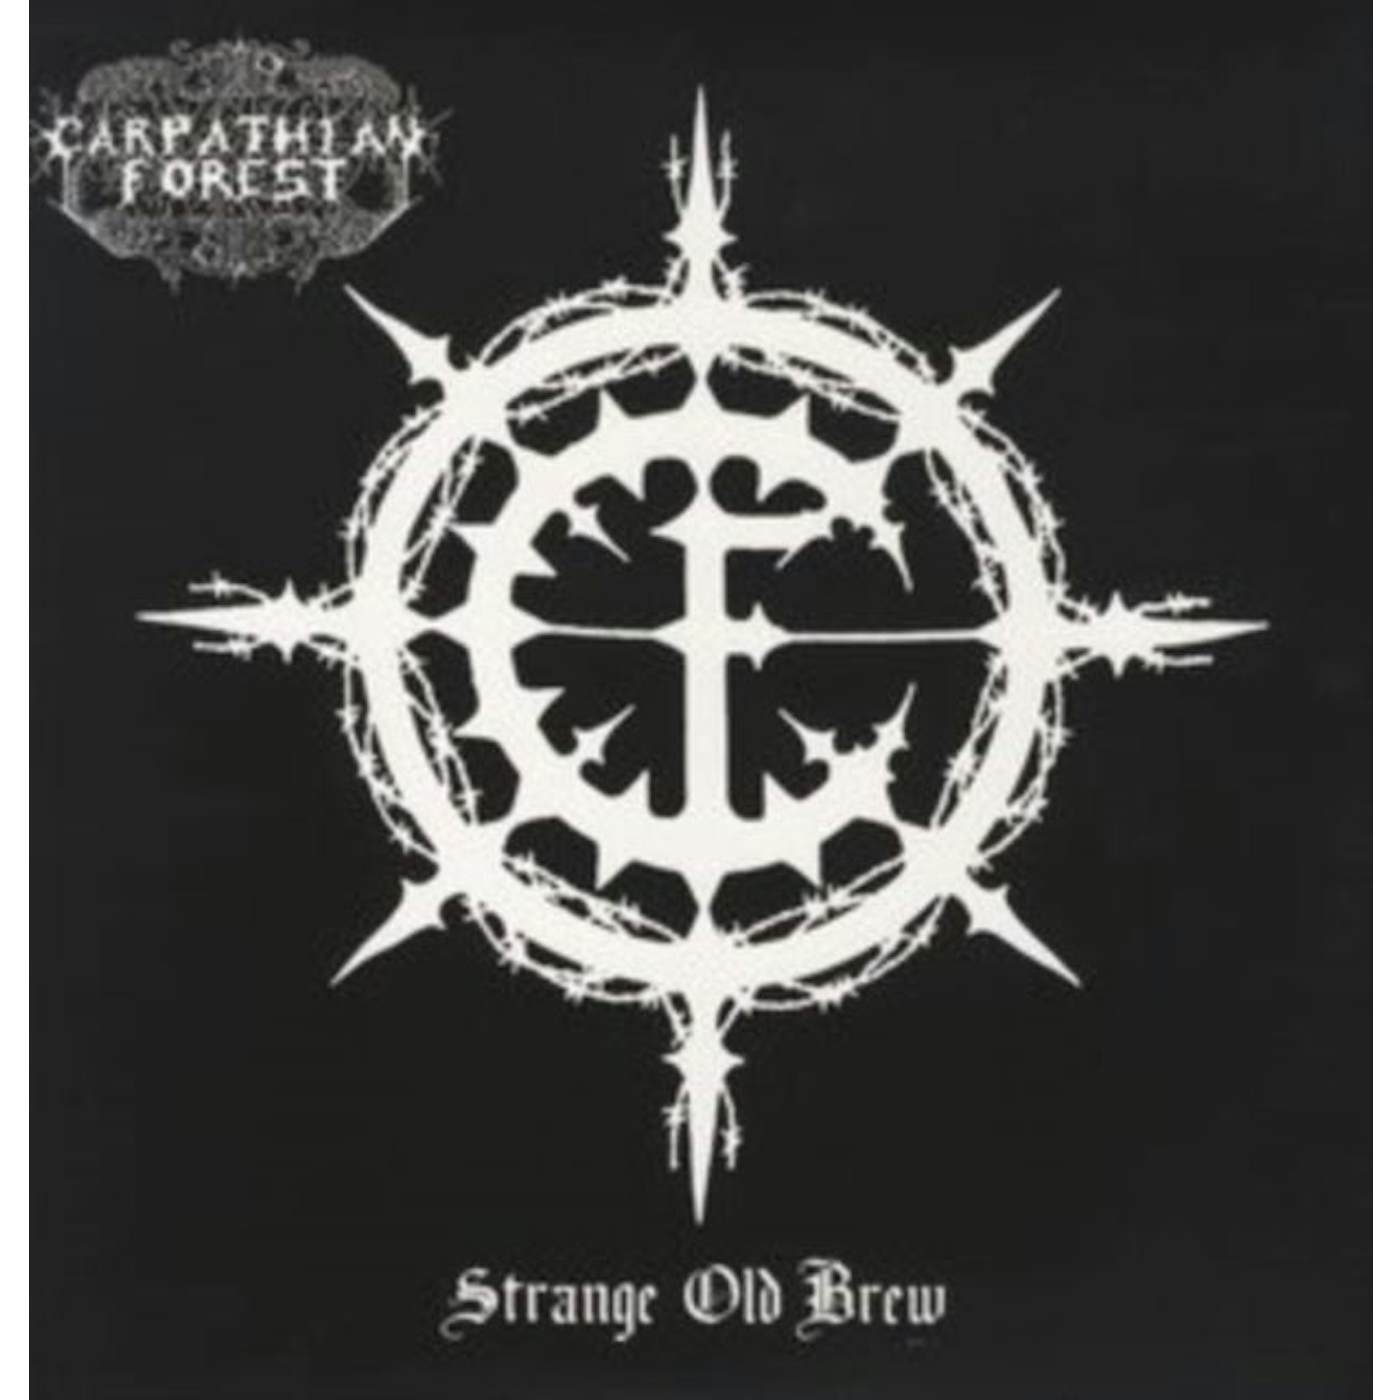 Carpathian Forest LP - Strange Old Brew (Vinyl)